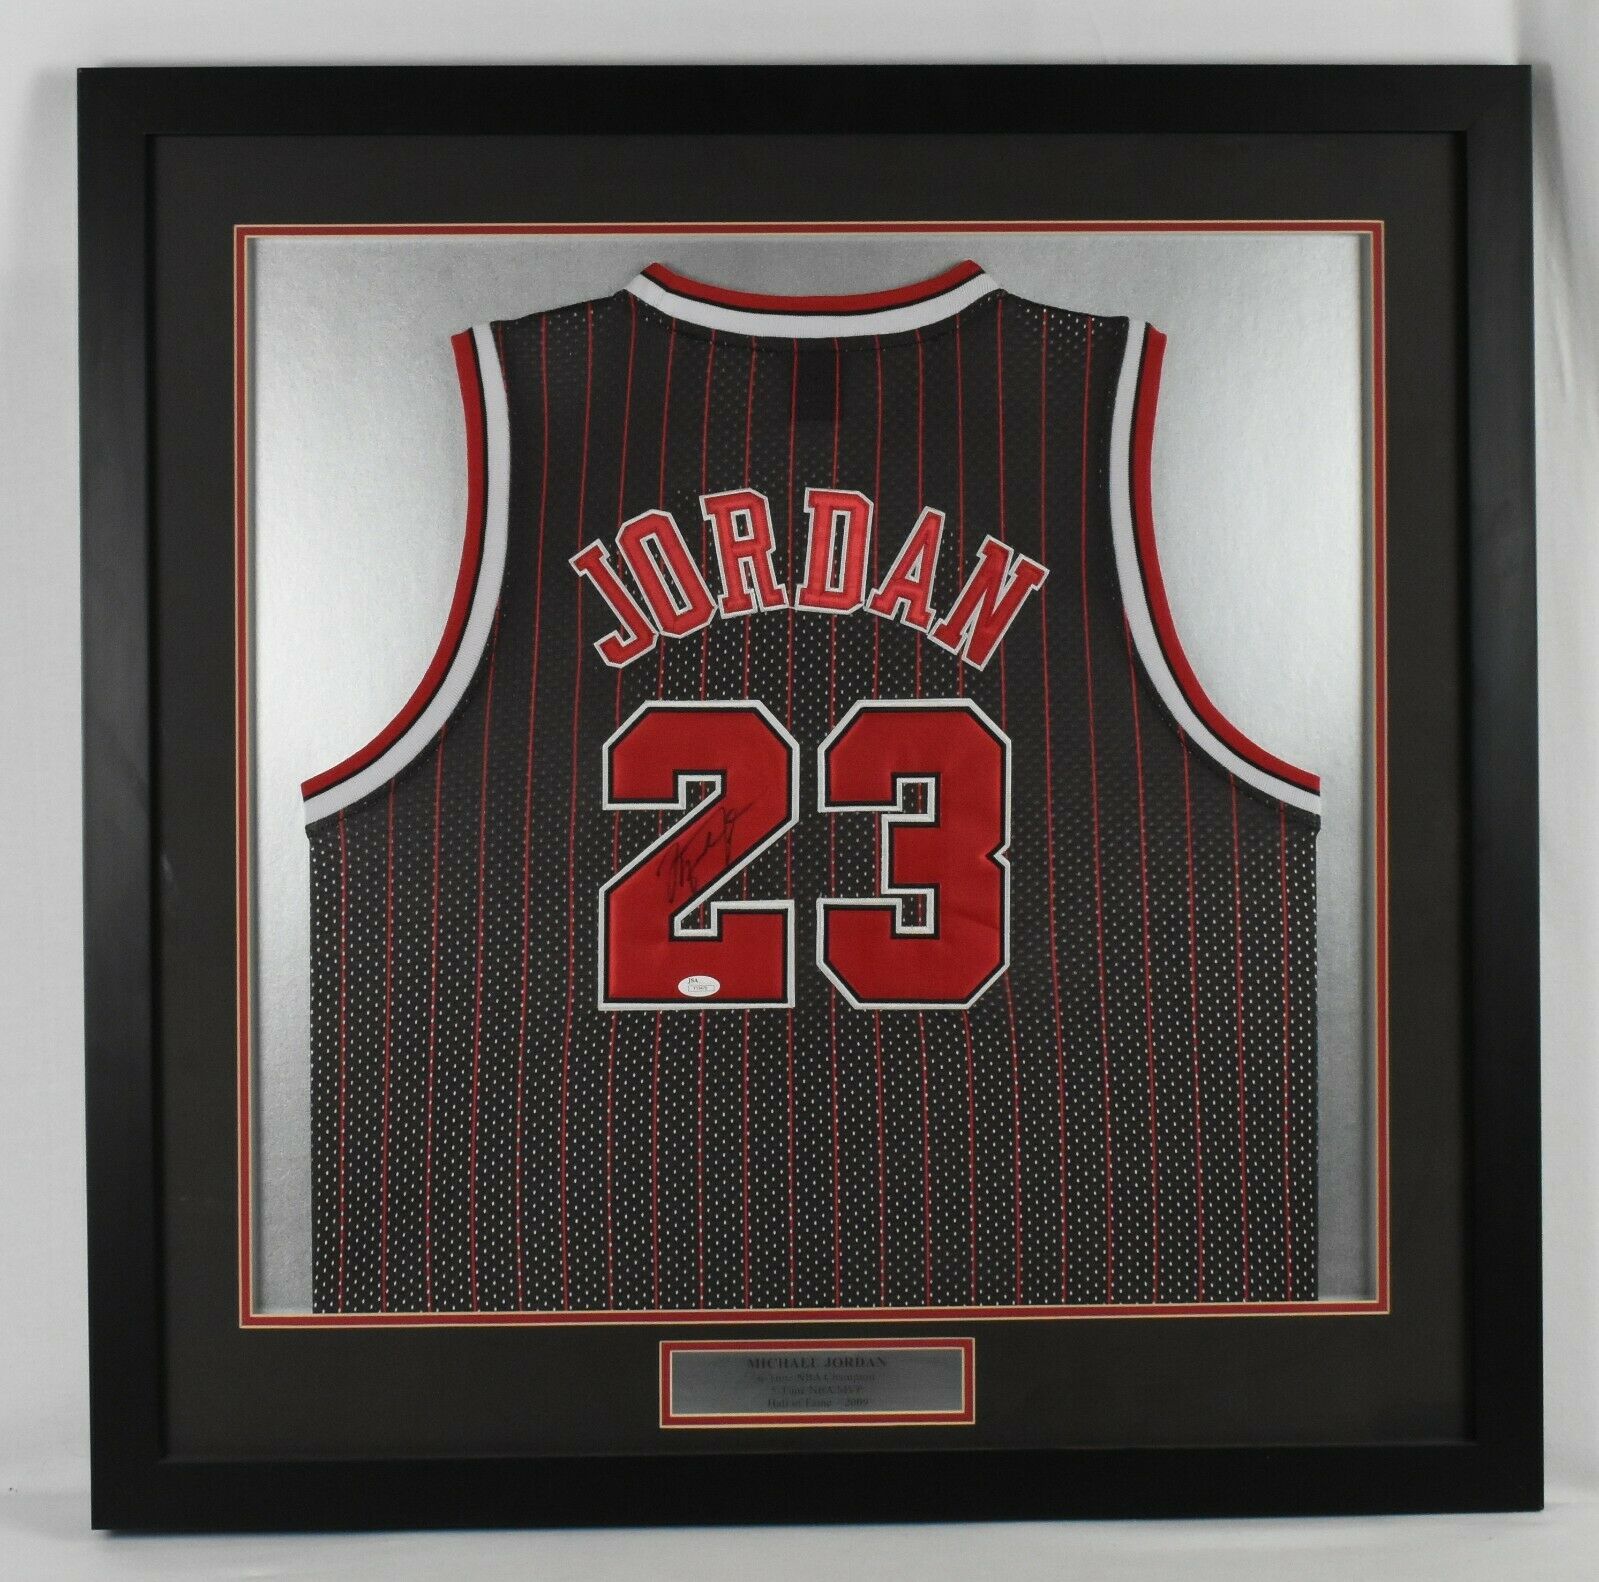 Michael Jordan Chicago Bulls Jersey Framed Art Print by